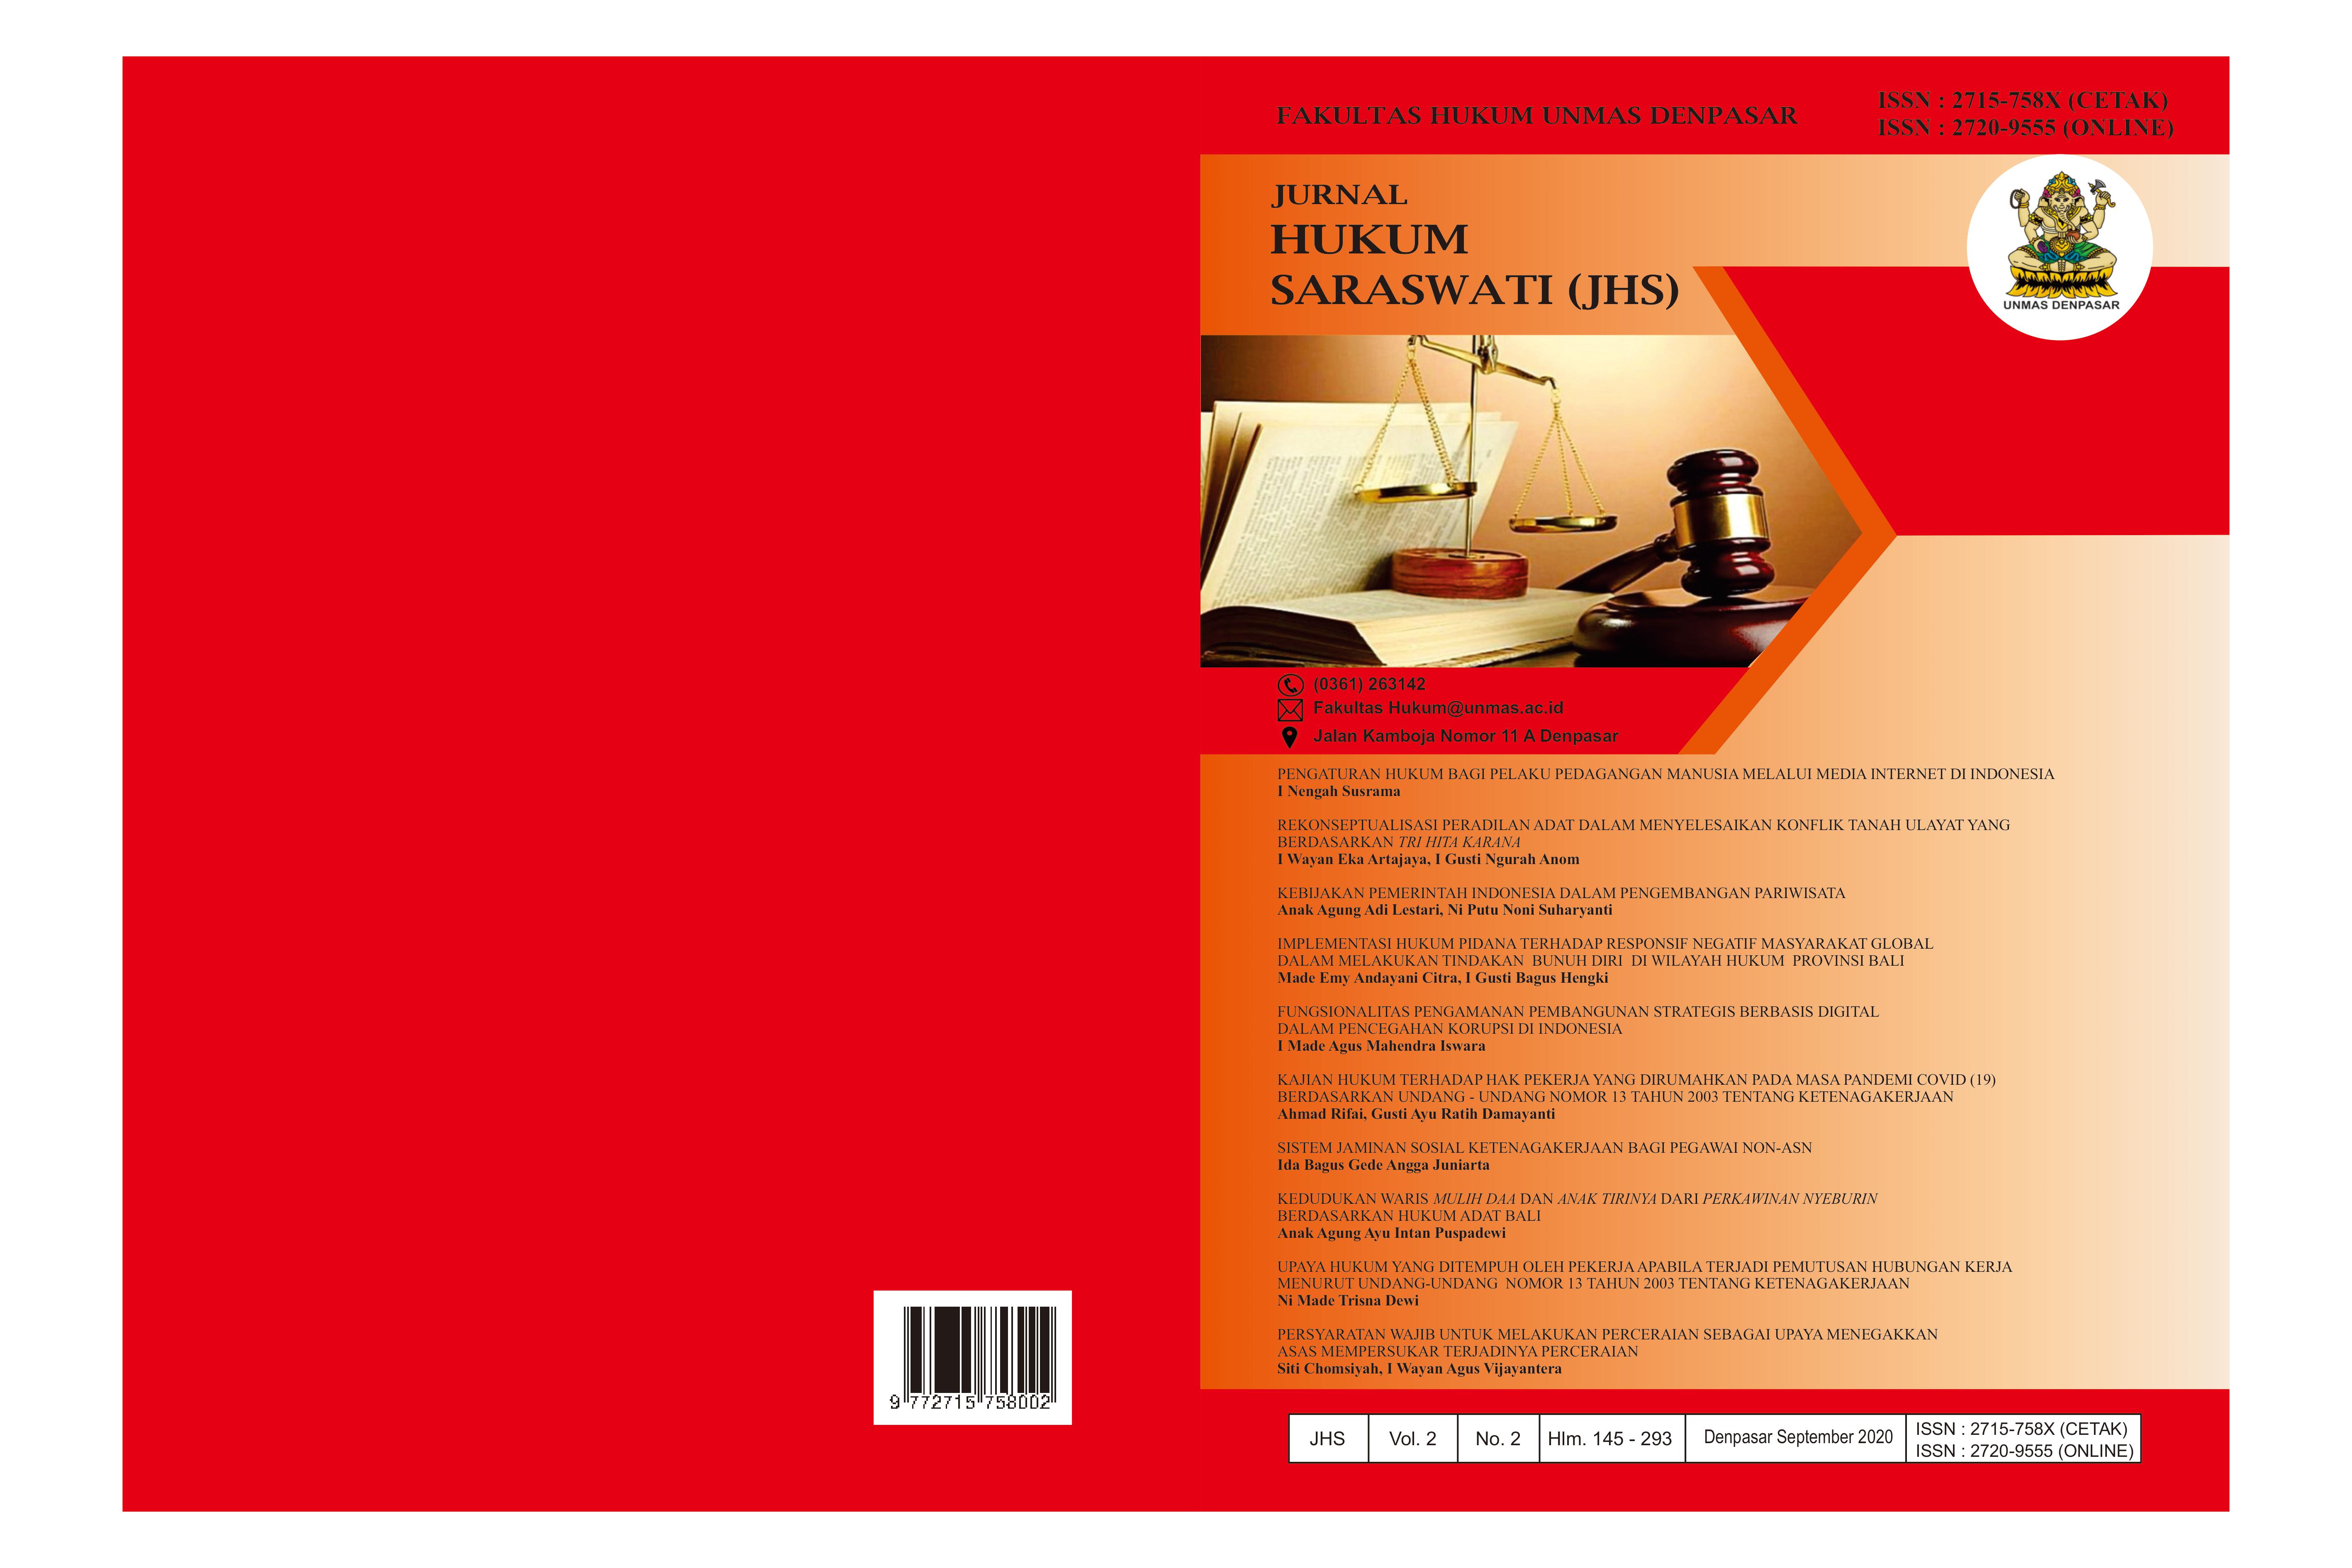 					Lihat Vol 2 No 2 (2020): Jurnal Hukum Saraswati
				